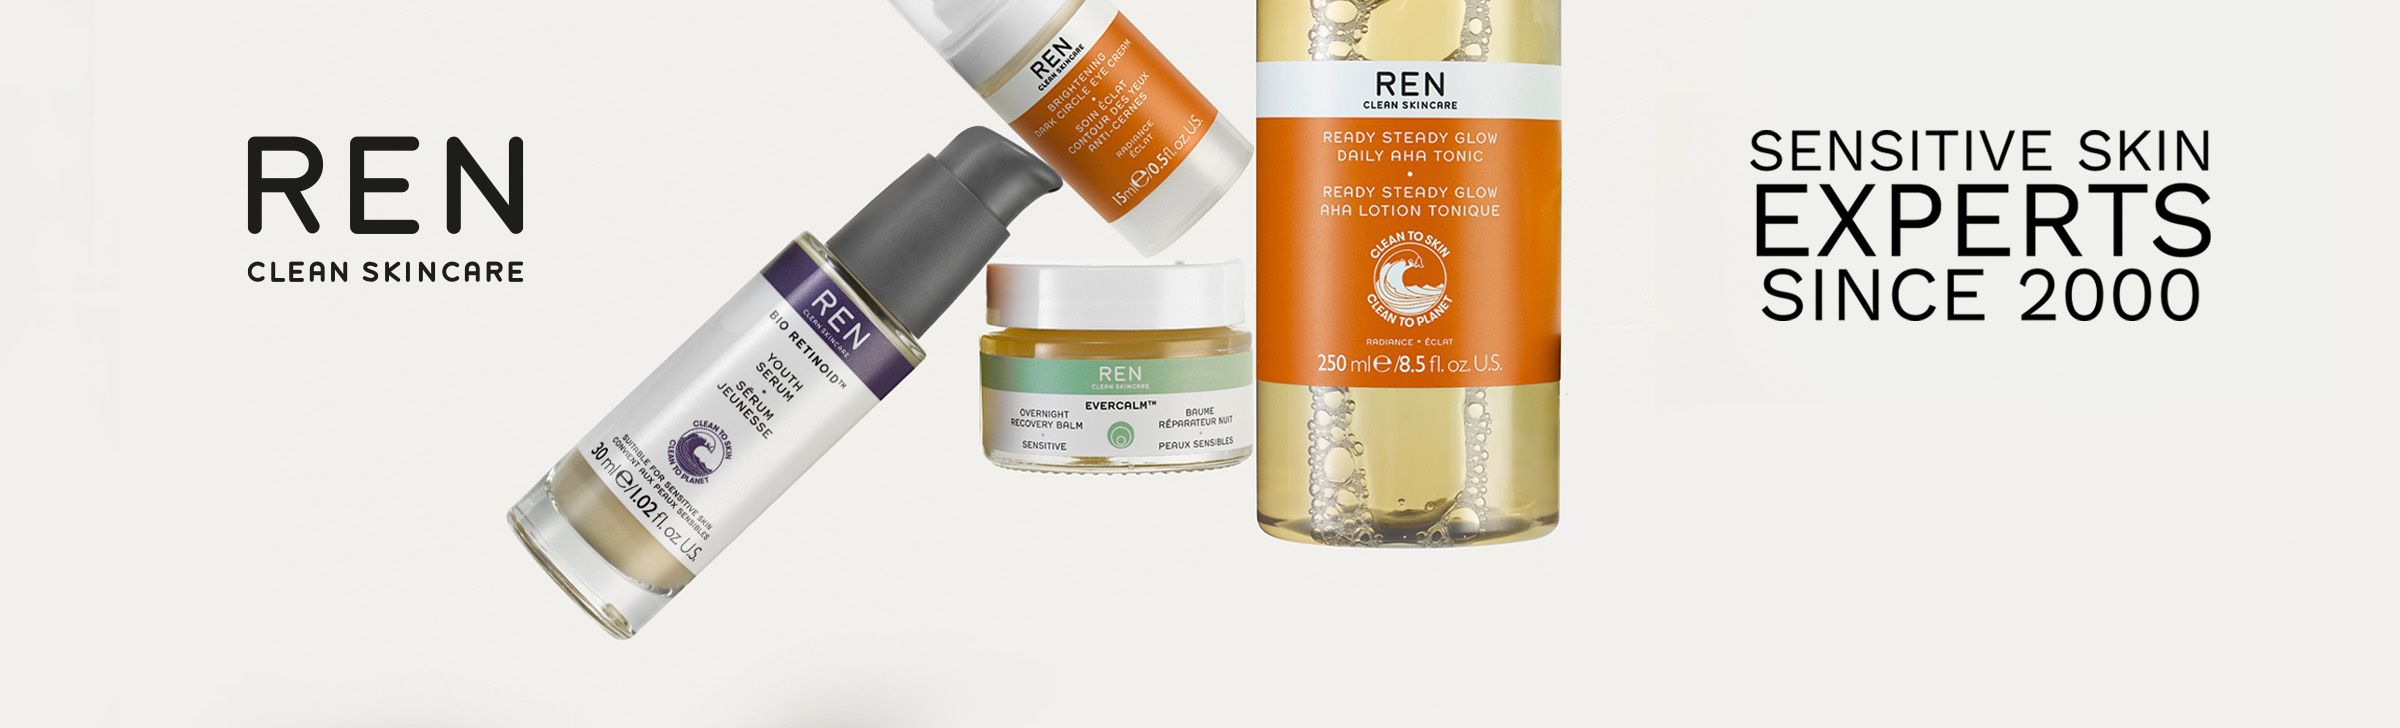 ren beauty brand banner - ren clean skincare products